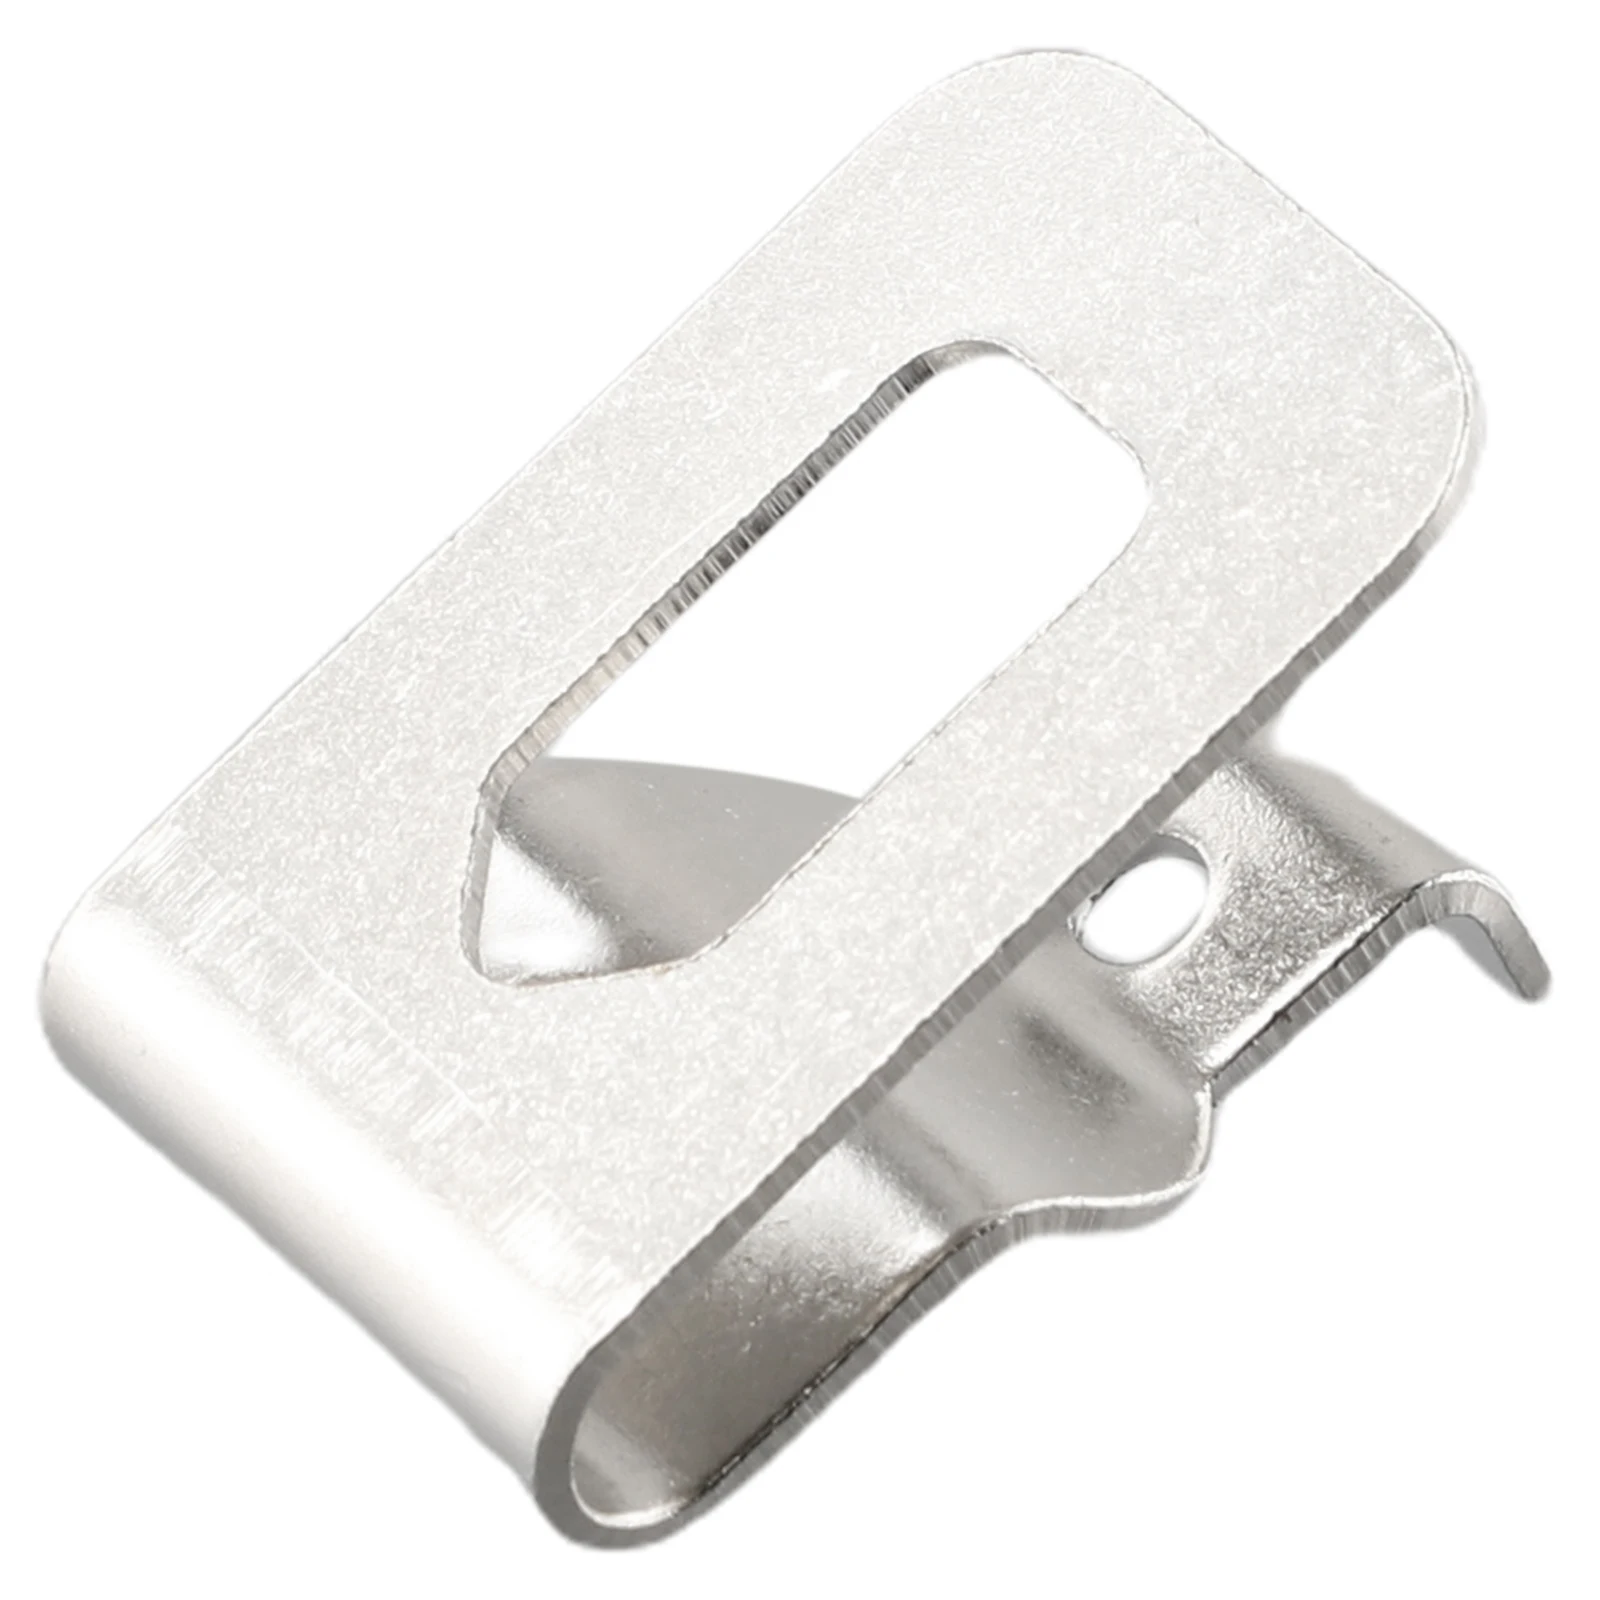 High Quality Home Power Tools Belt Clip Hook Belt Hook Part Accessories N268241 N169778 DCD980 Silver Steel 45*28mm